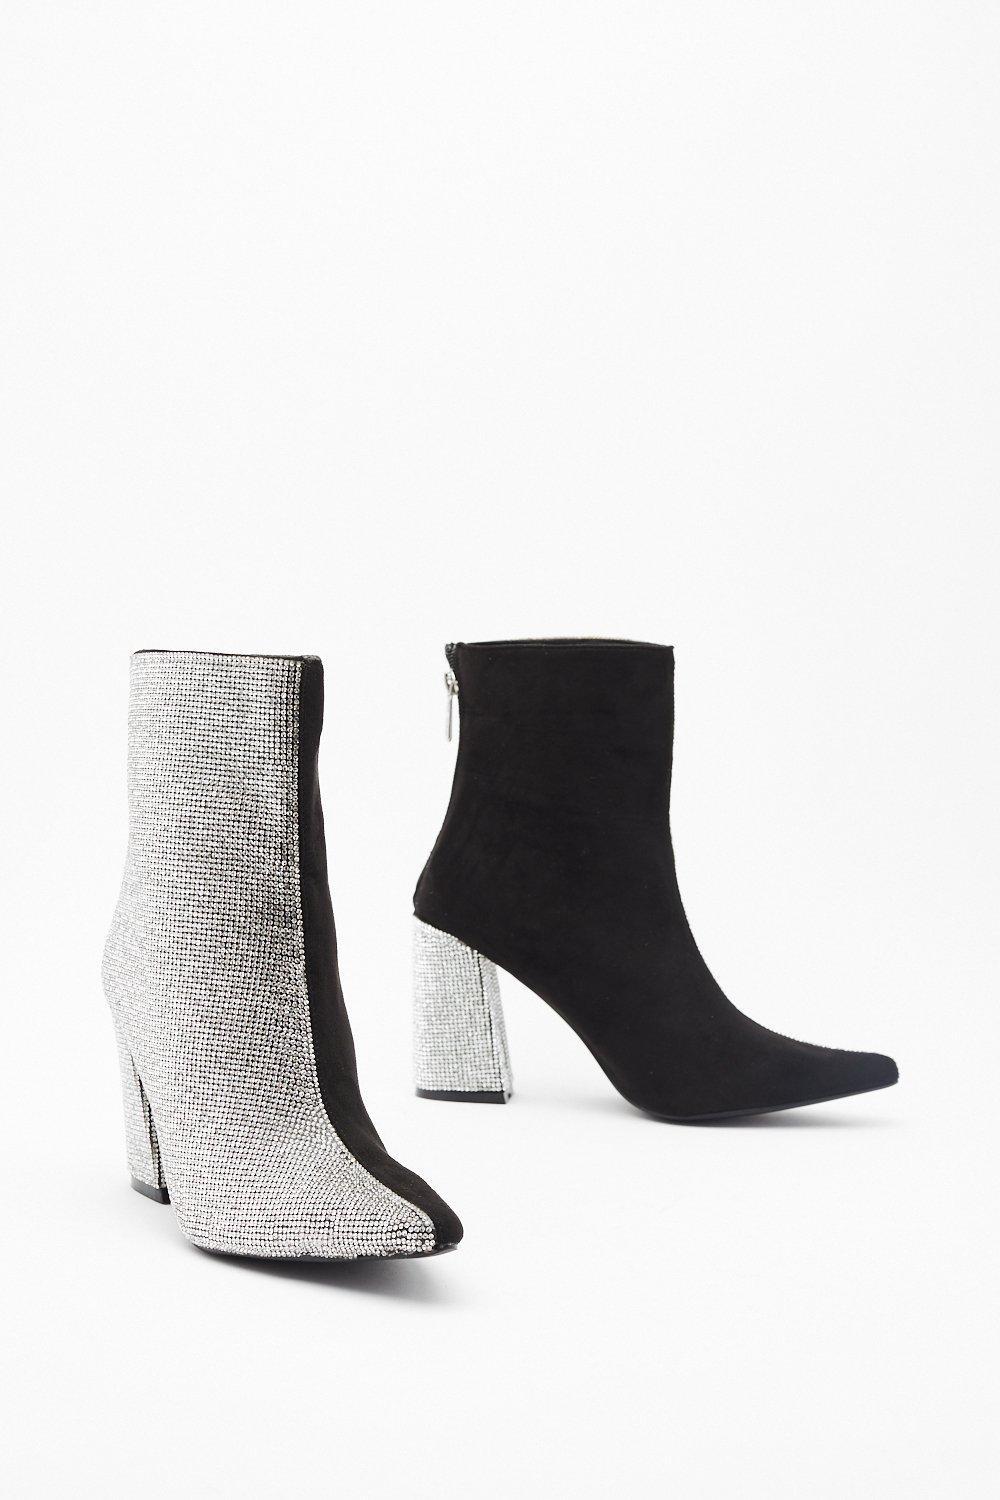 black boots with diamante heel